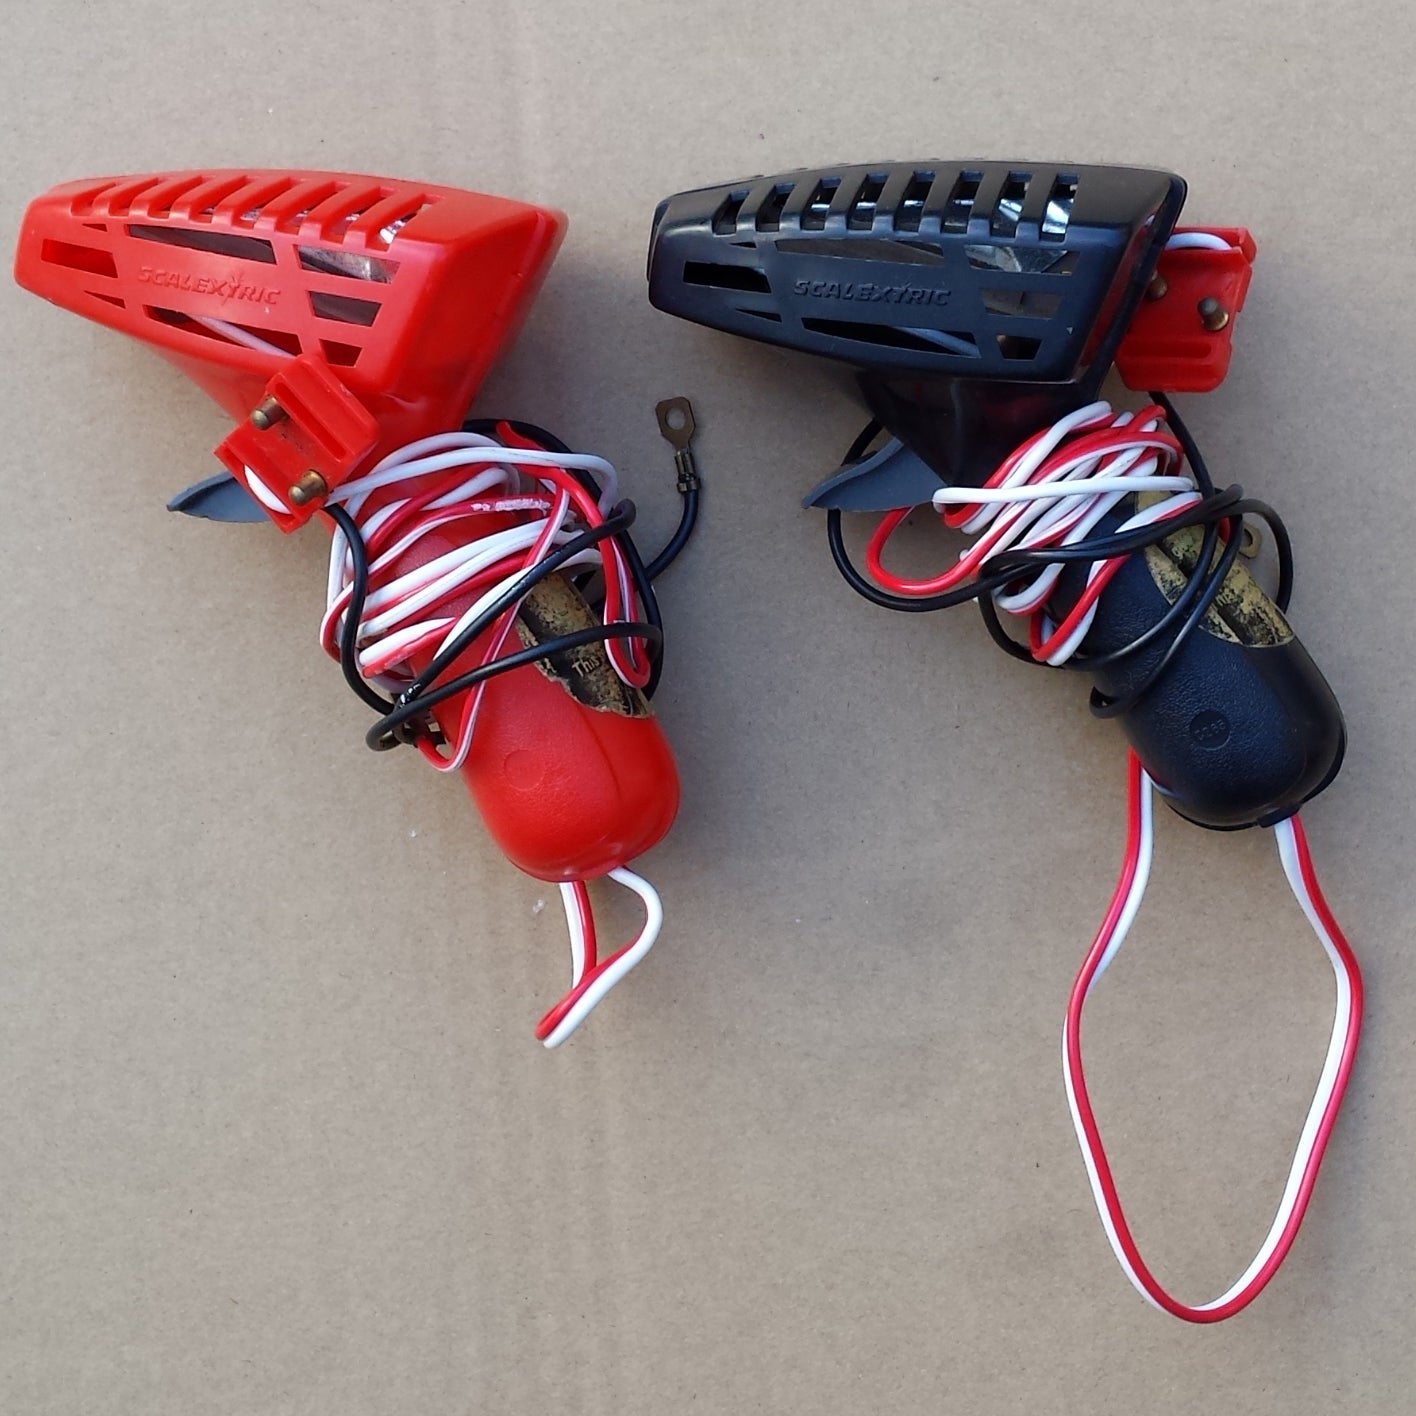 Controladores / aceleradores Scalextric Classic - C297 rojo y C298 negro